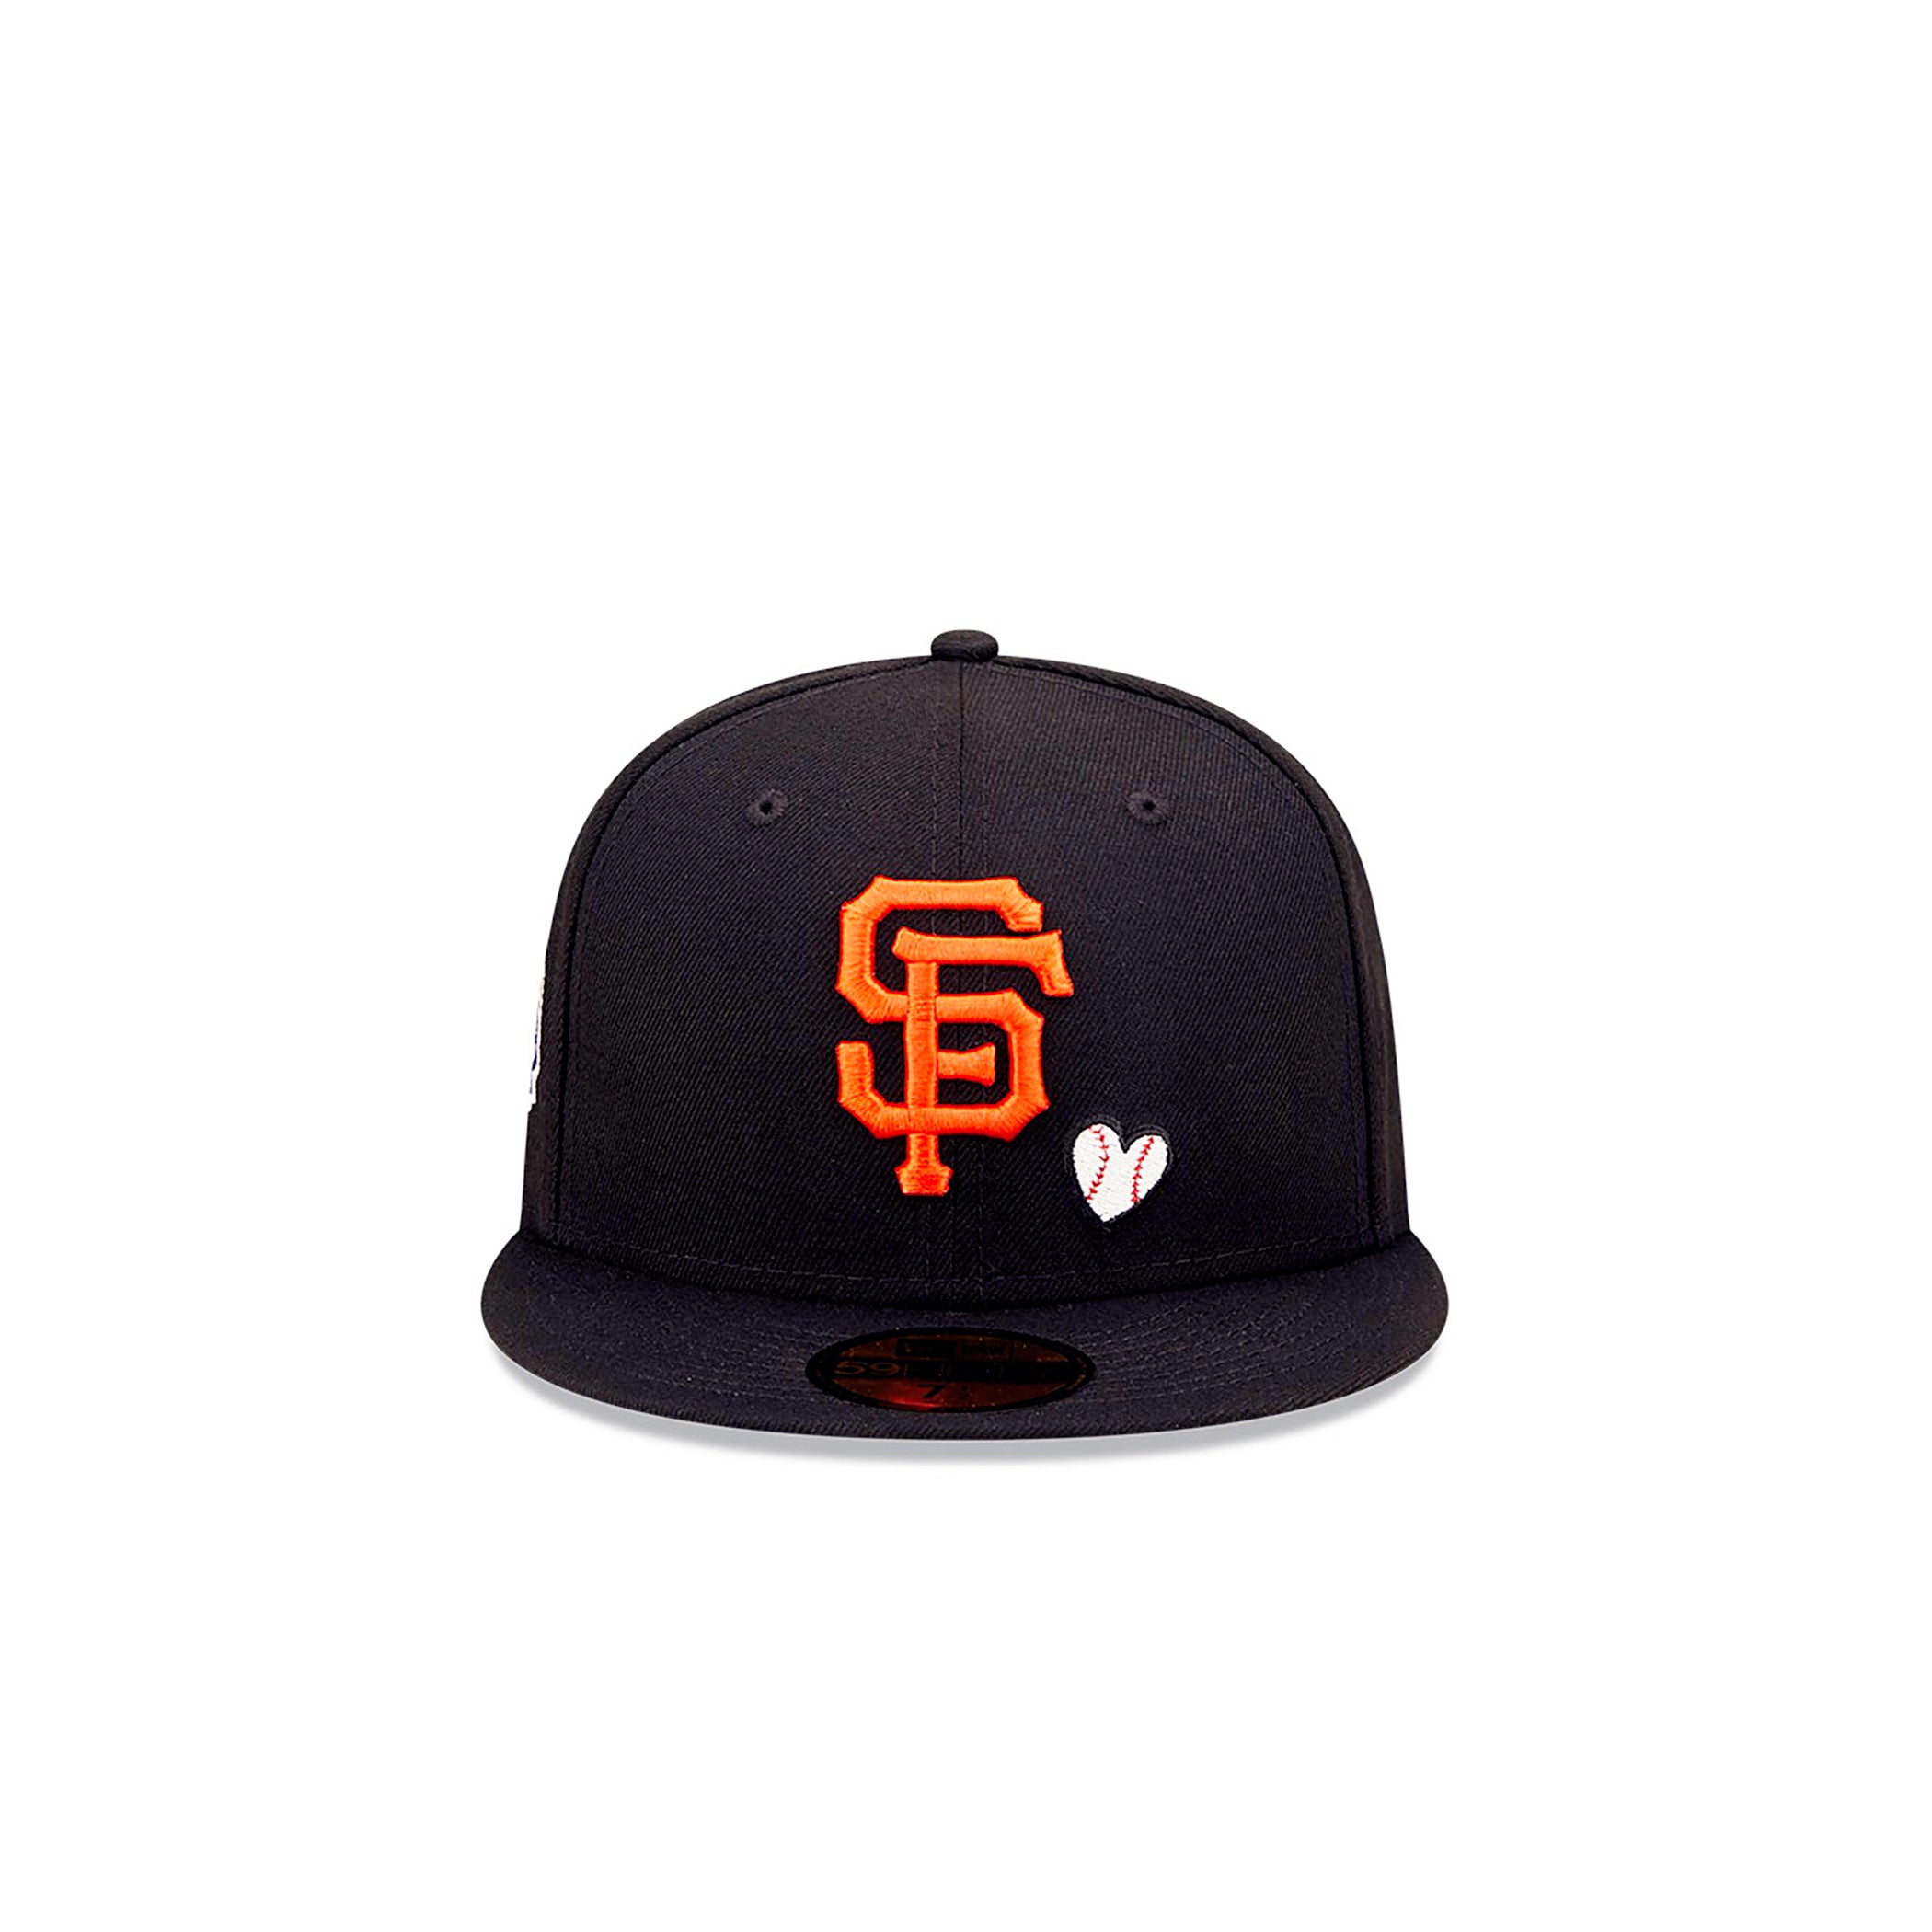 San Francisco Giants Hats in San Francisco Giants Team Shop